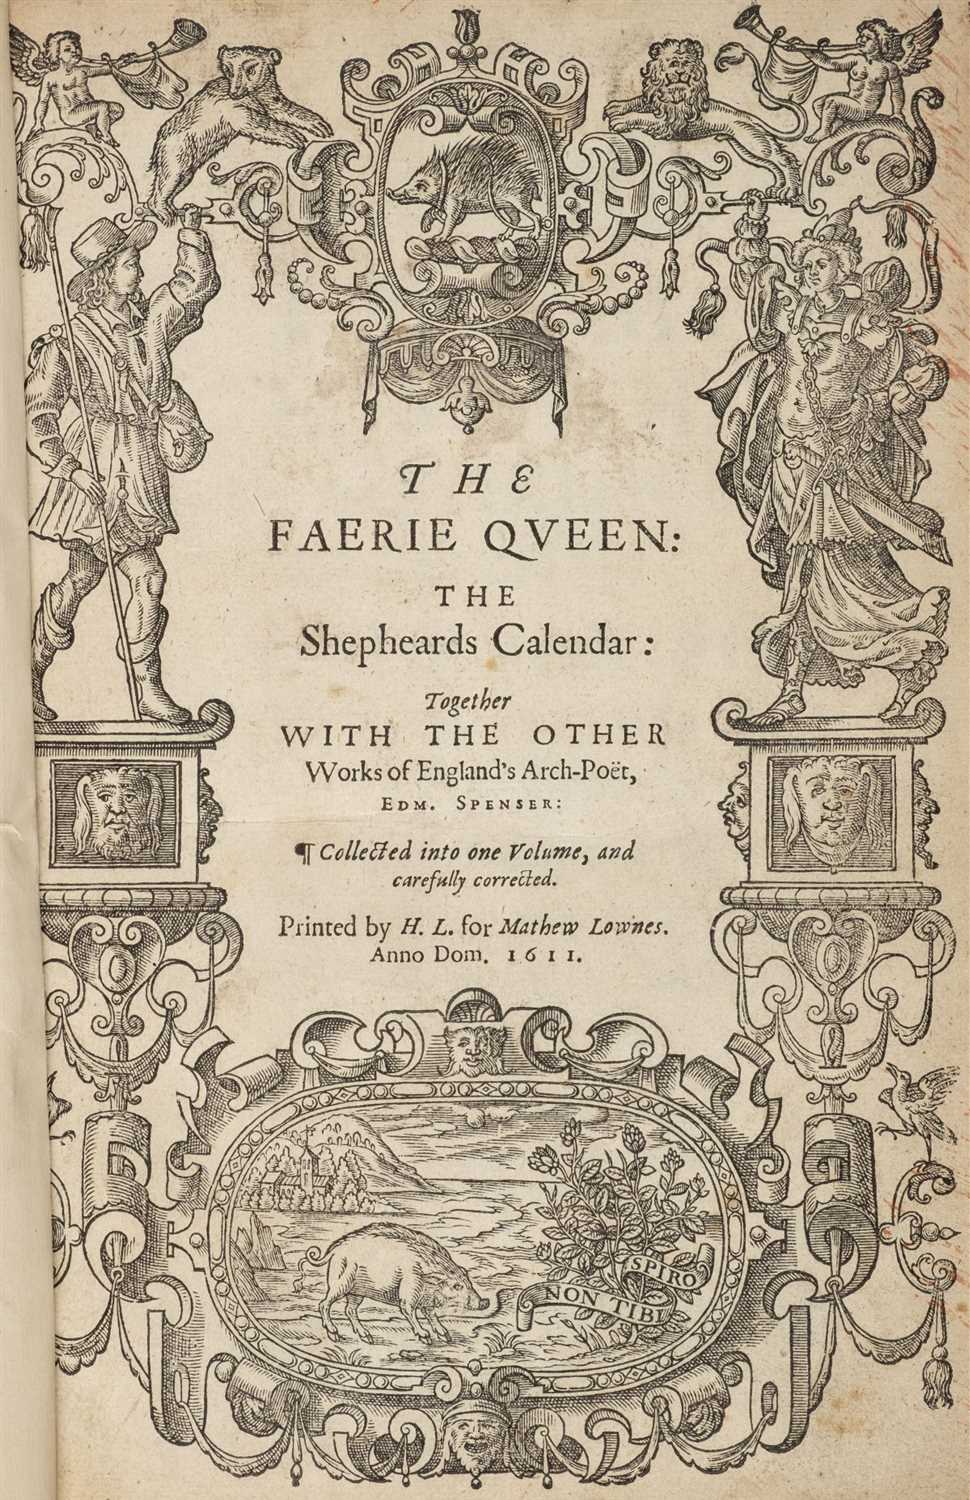 Lot 208 - Spenser (Edmund). The Faerie Queen: The Shepheards Calendar..., 1611